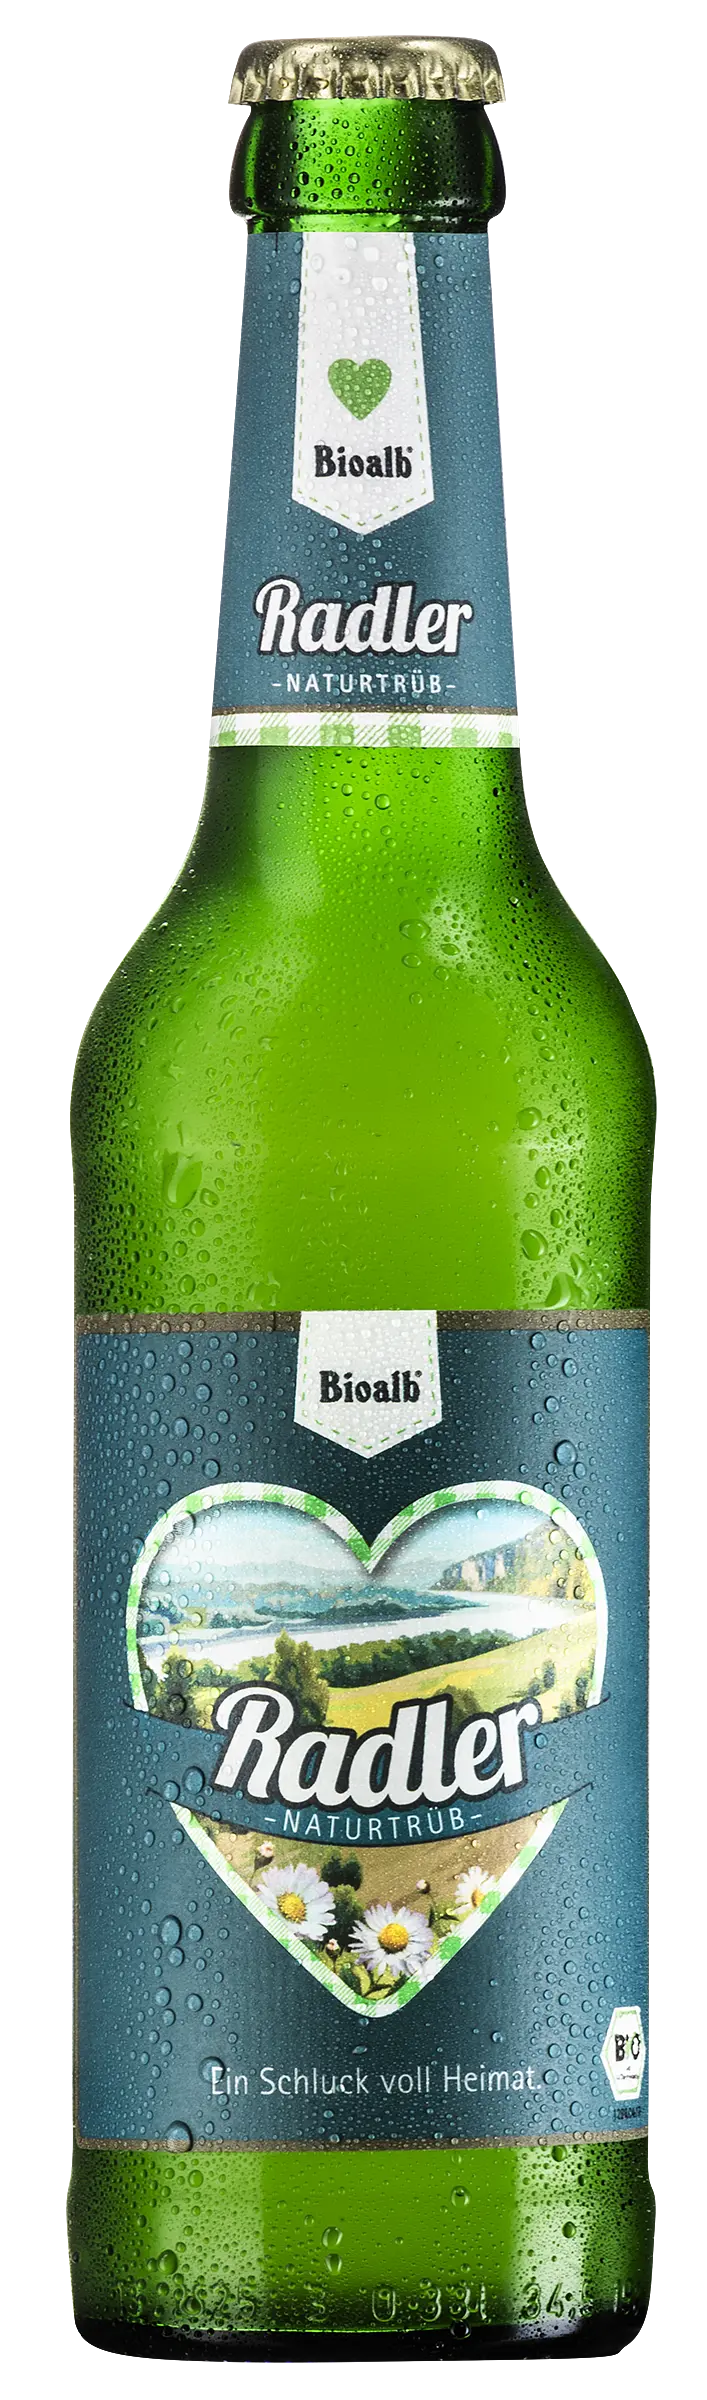 Bioalb Radler Naturtrüb, Bio-Bier, Zoller-Hof Brauerei